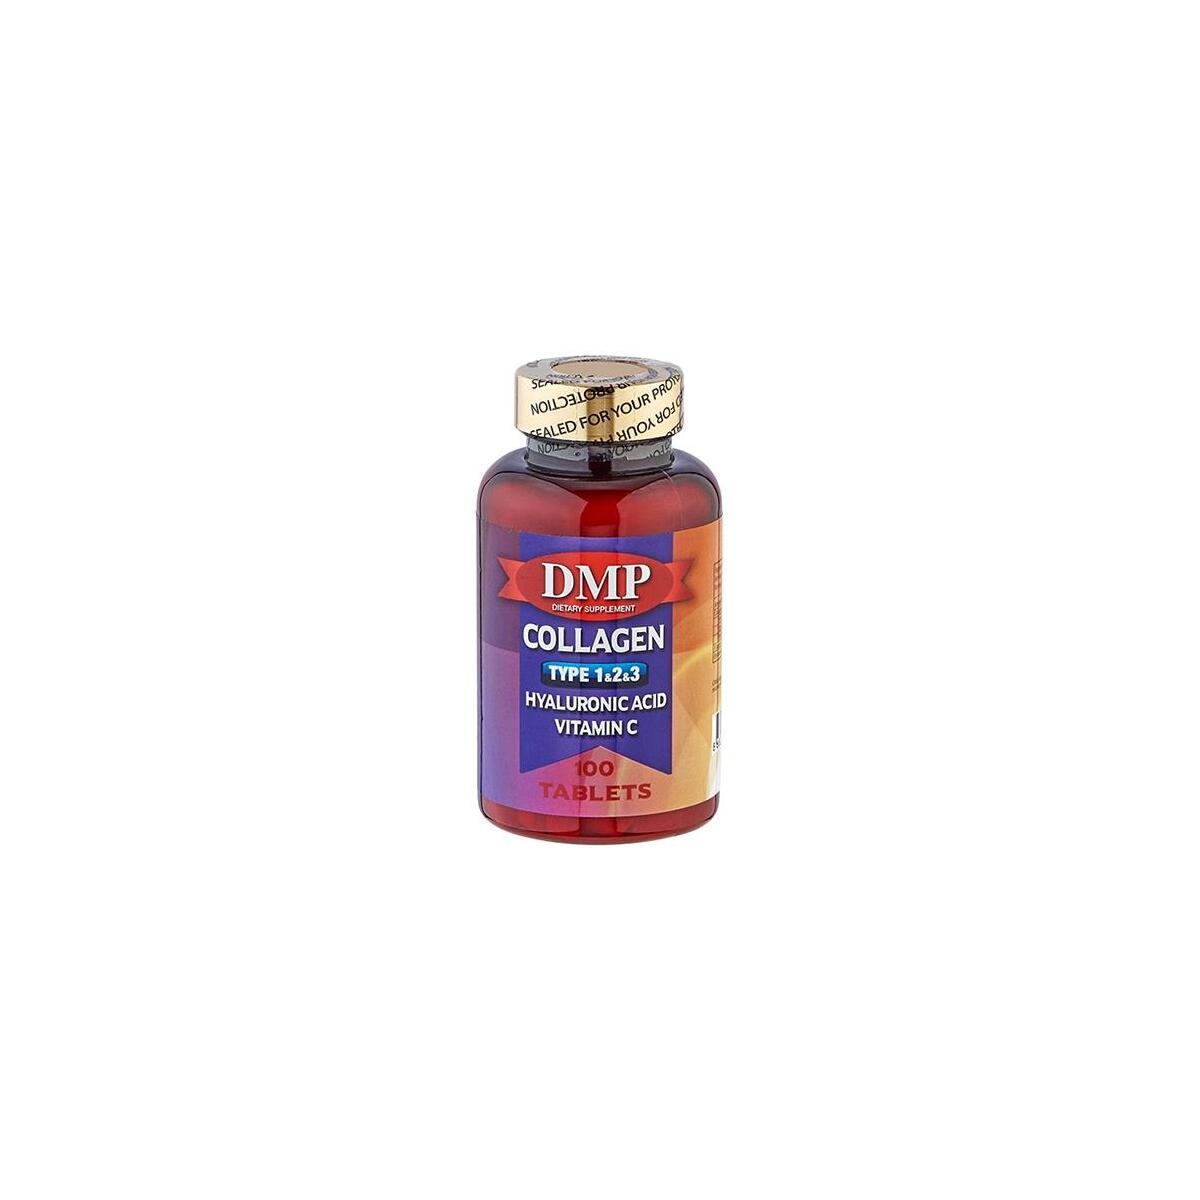 Dmp Collagen Type 1-2-3 100 Tablet Hyaluronic Acid Vitamin C